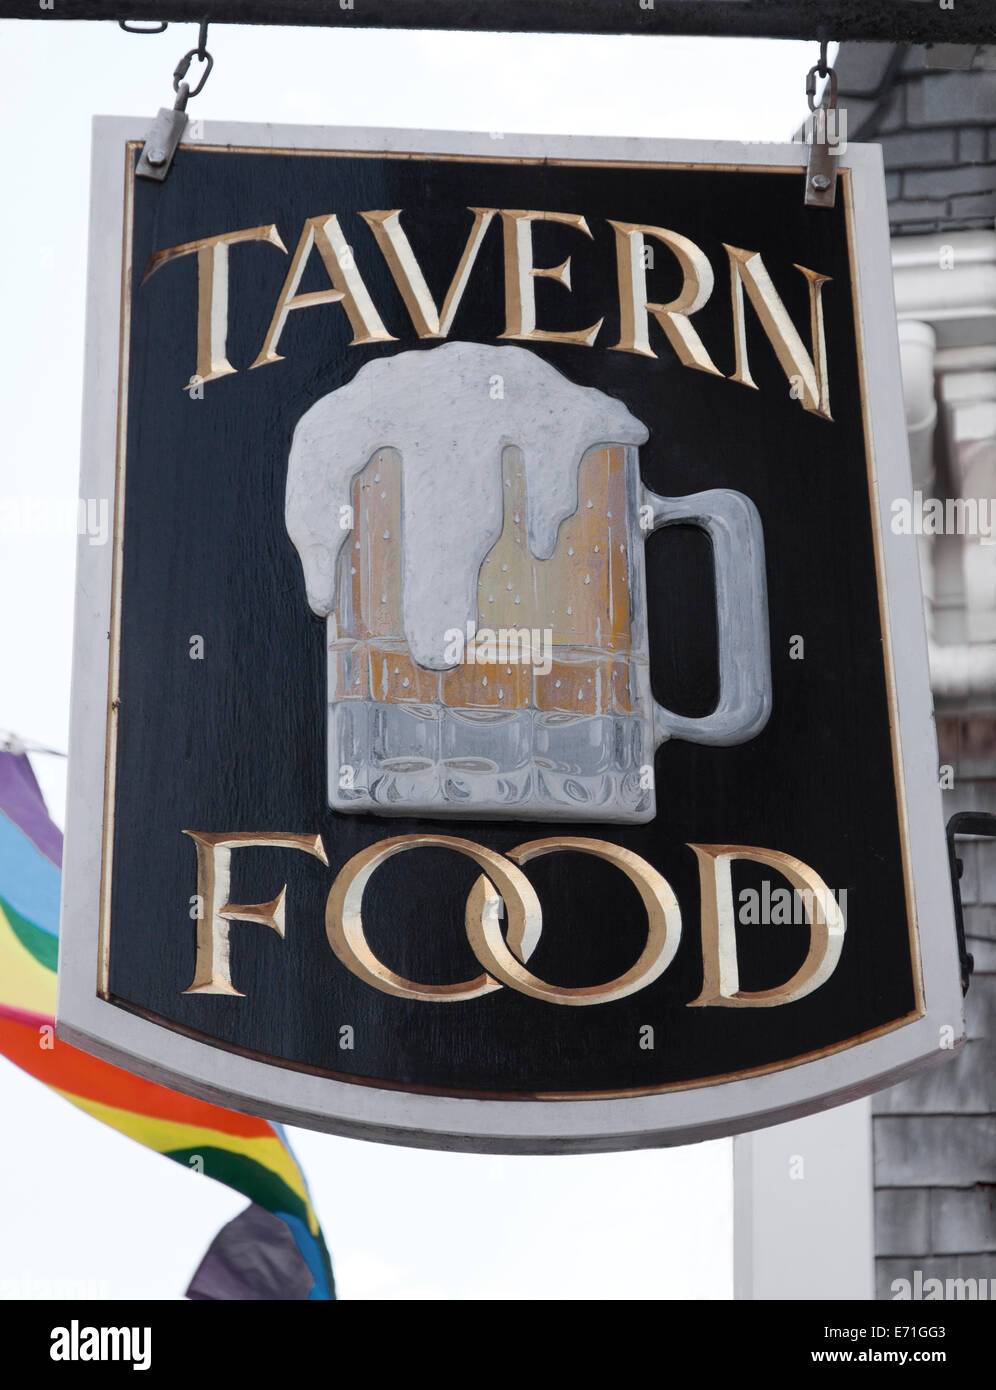 Tavern Food sign hanging outdoors. Stock Photo